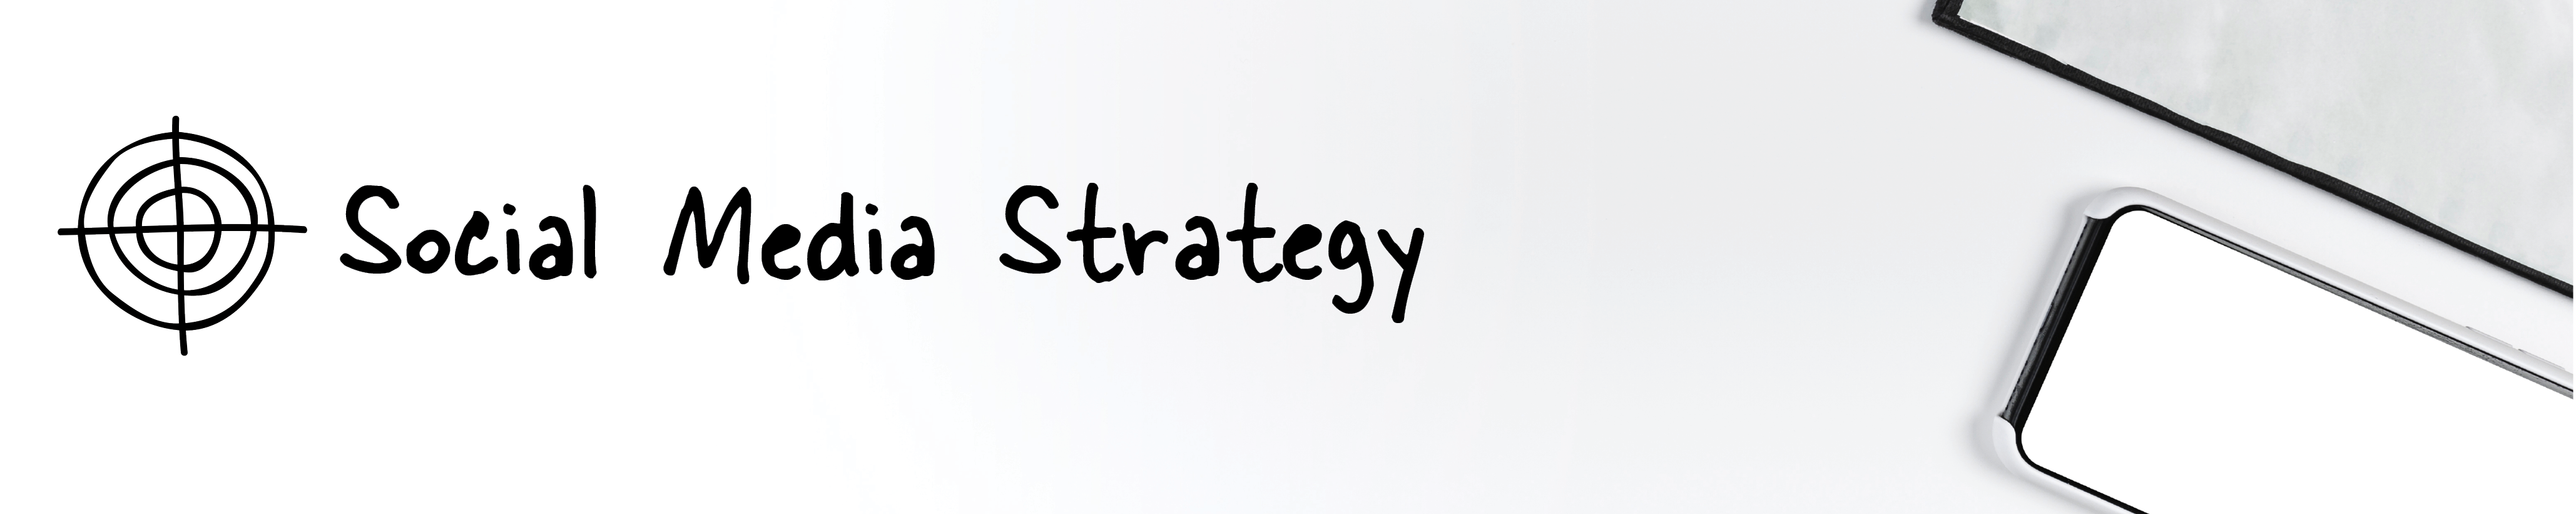 Social Media Strategy copy 1